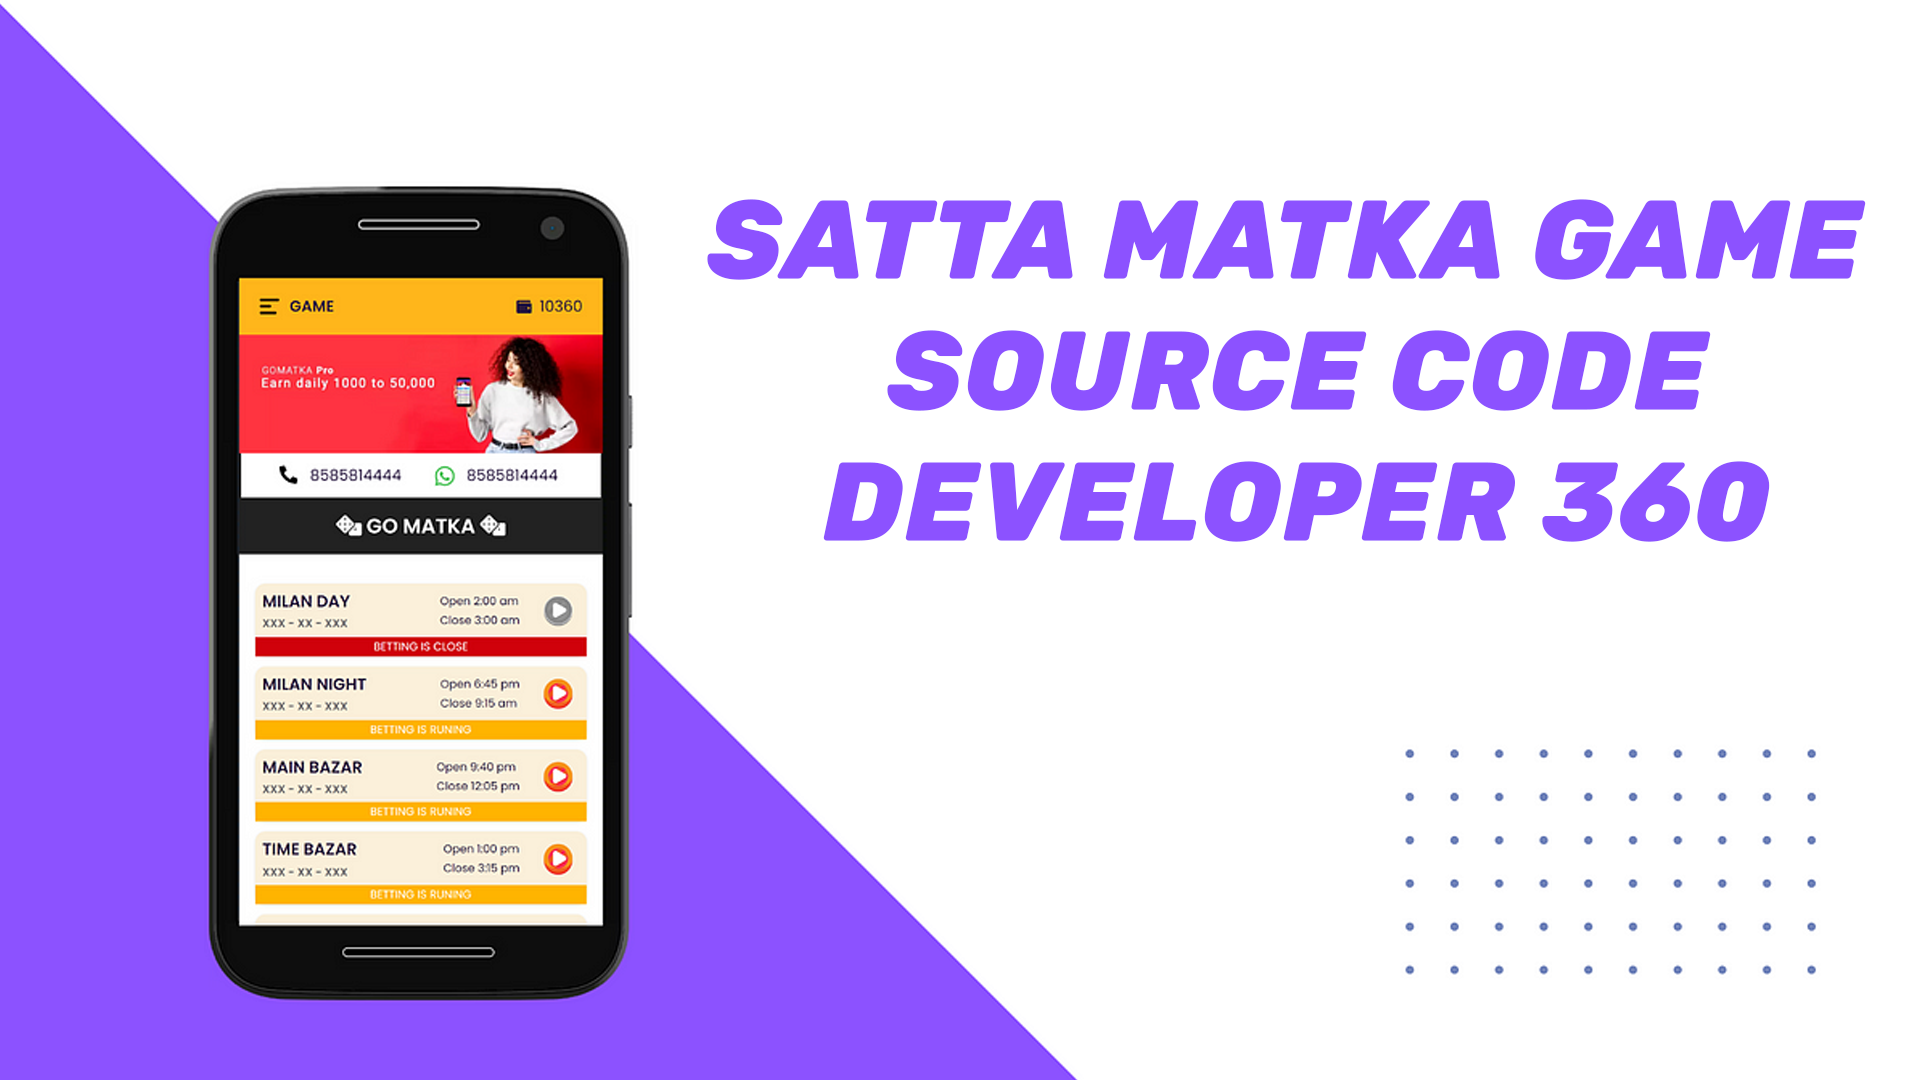 Satta Matka Game Source Code - Developer 360